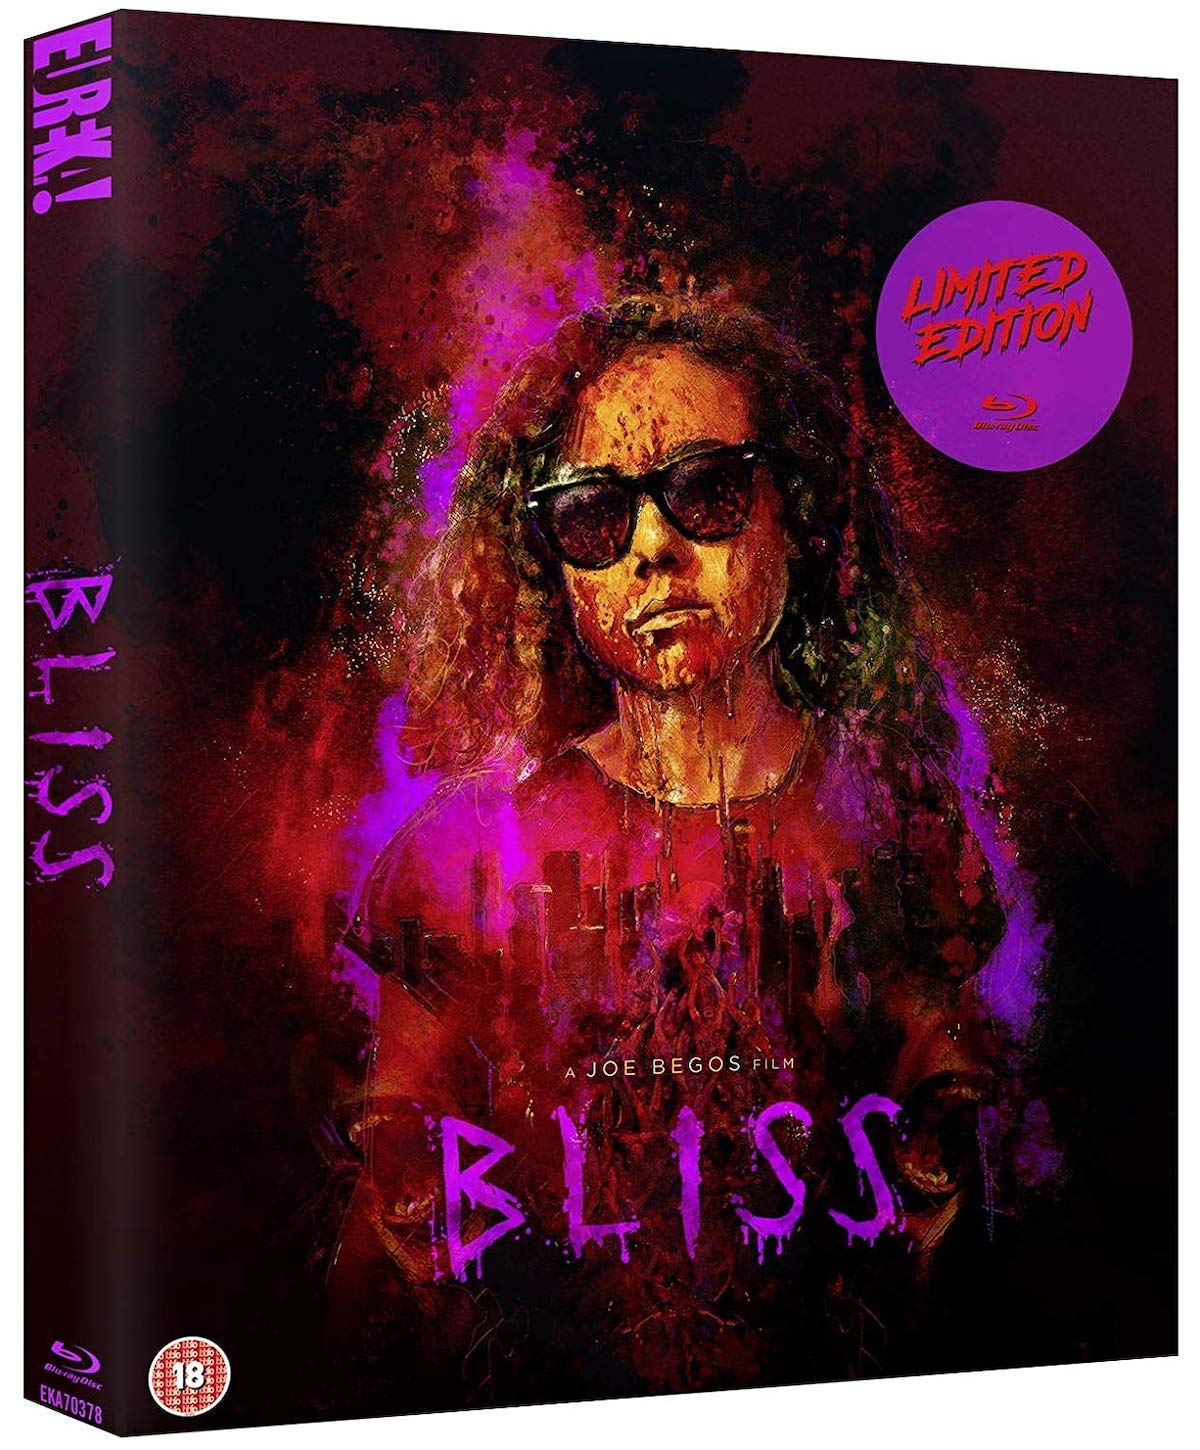 bliss (2019)